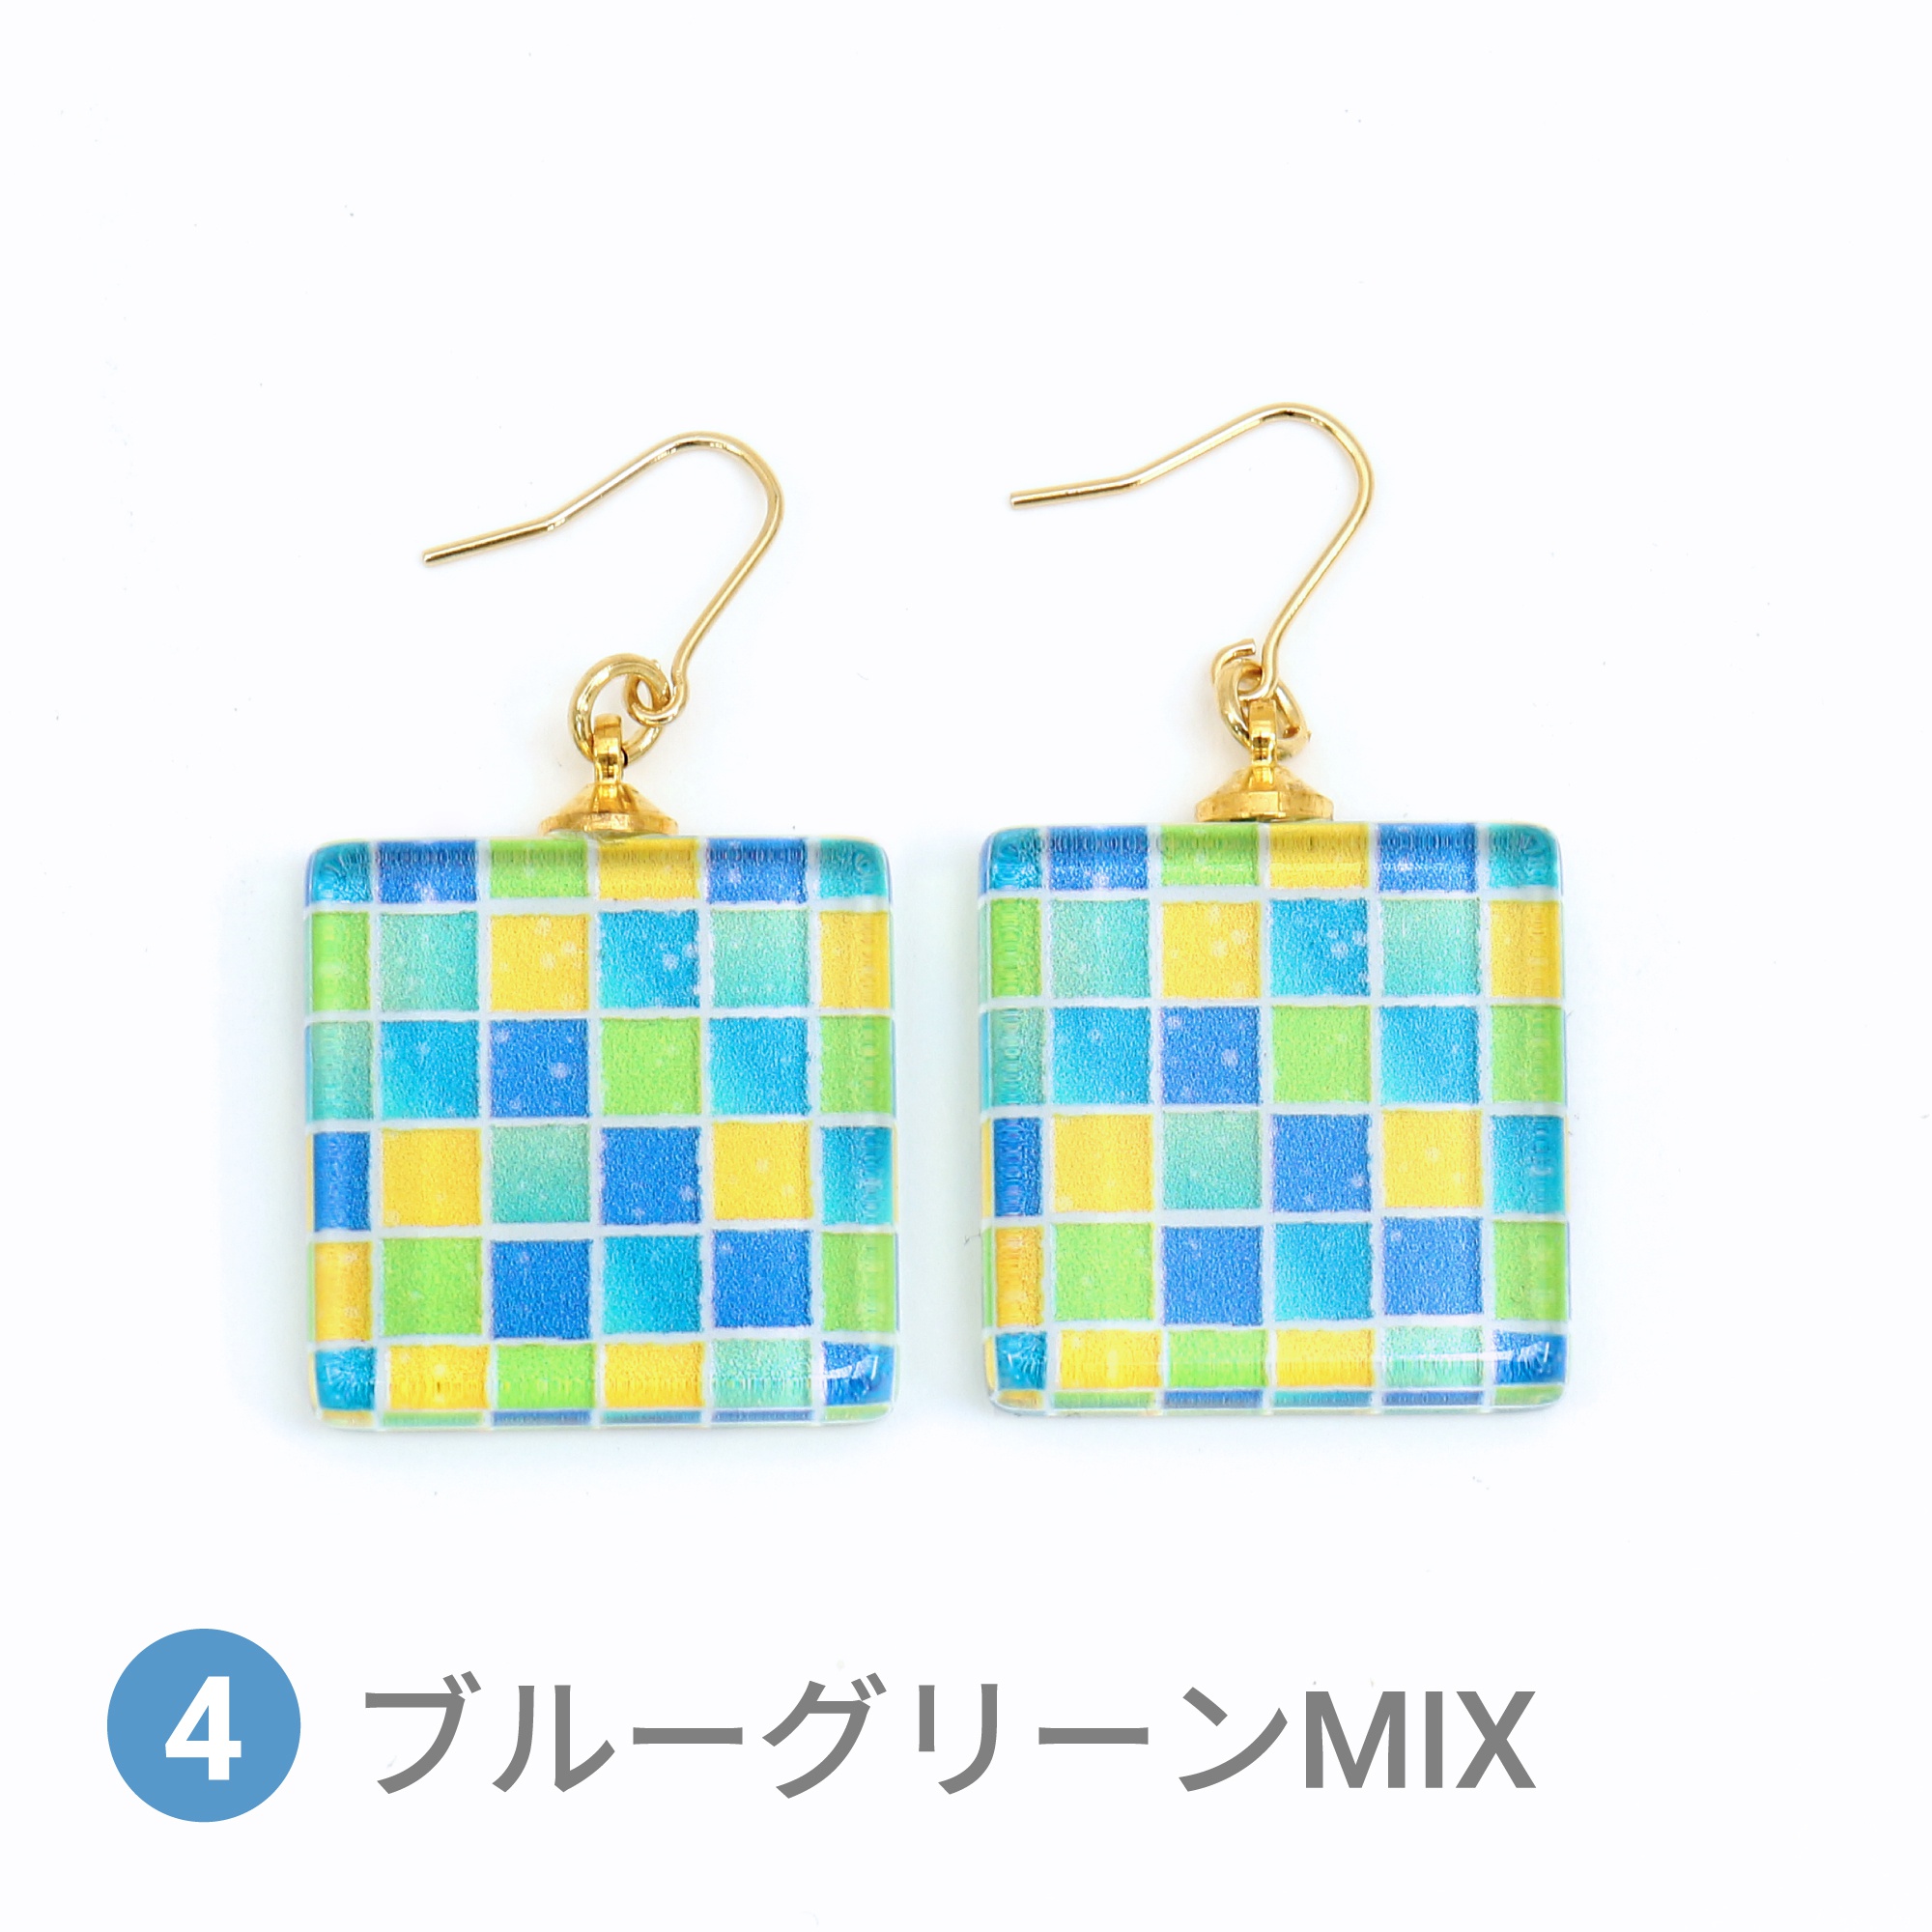 Glass accessories Pierced Earring TILE blueglreen mix square shape